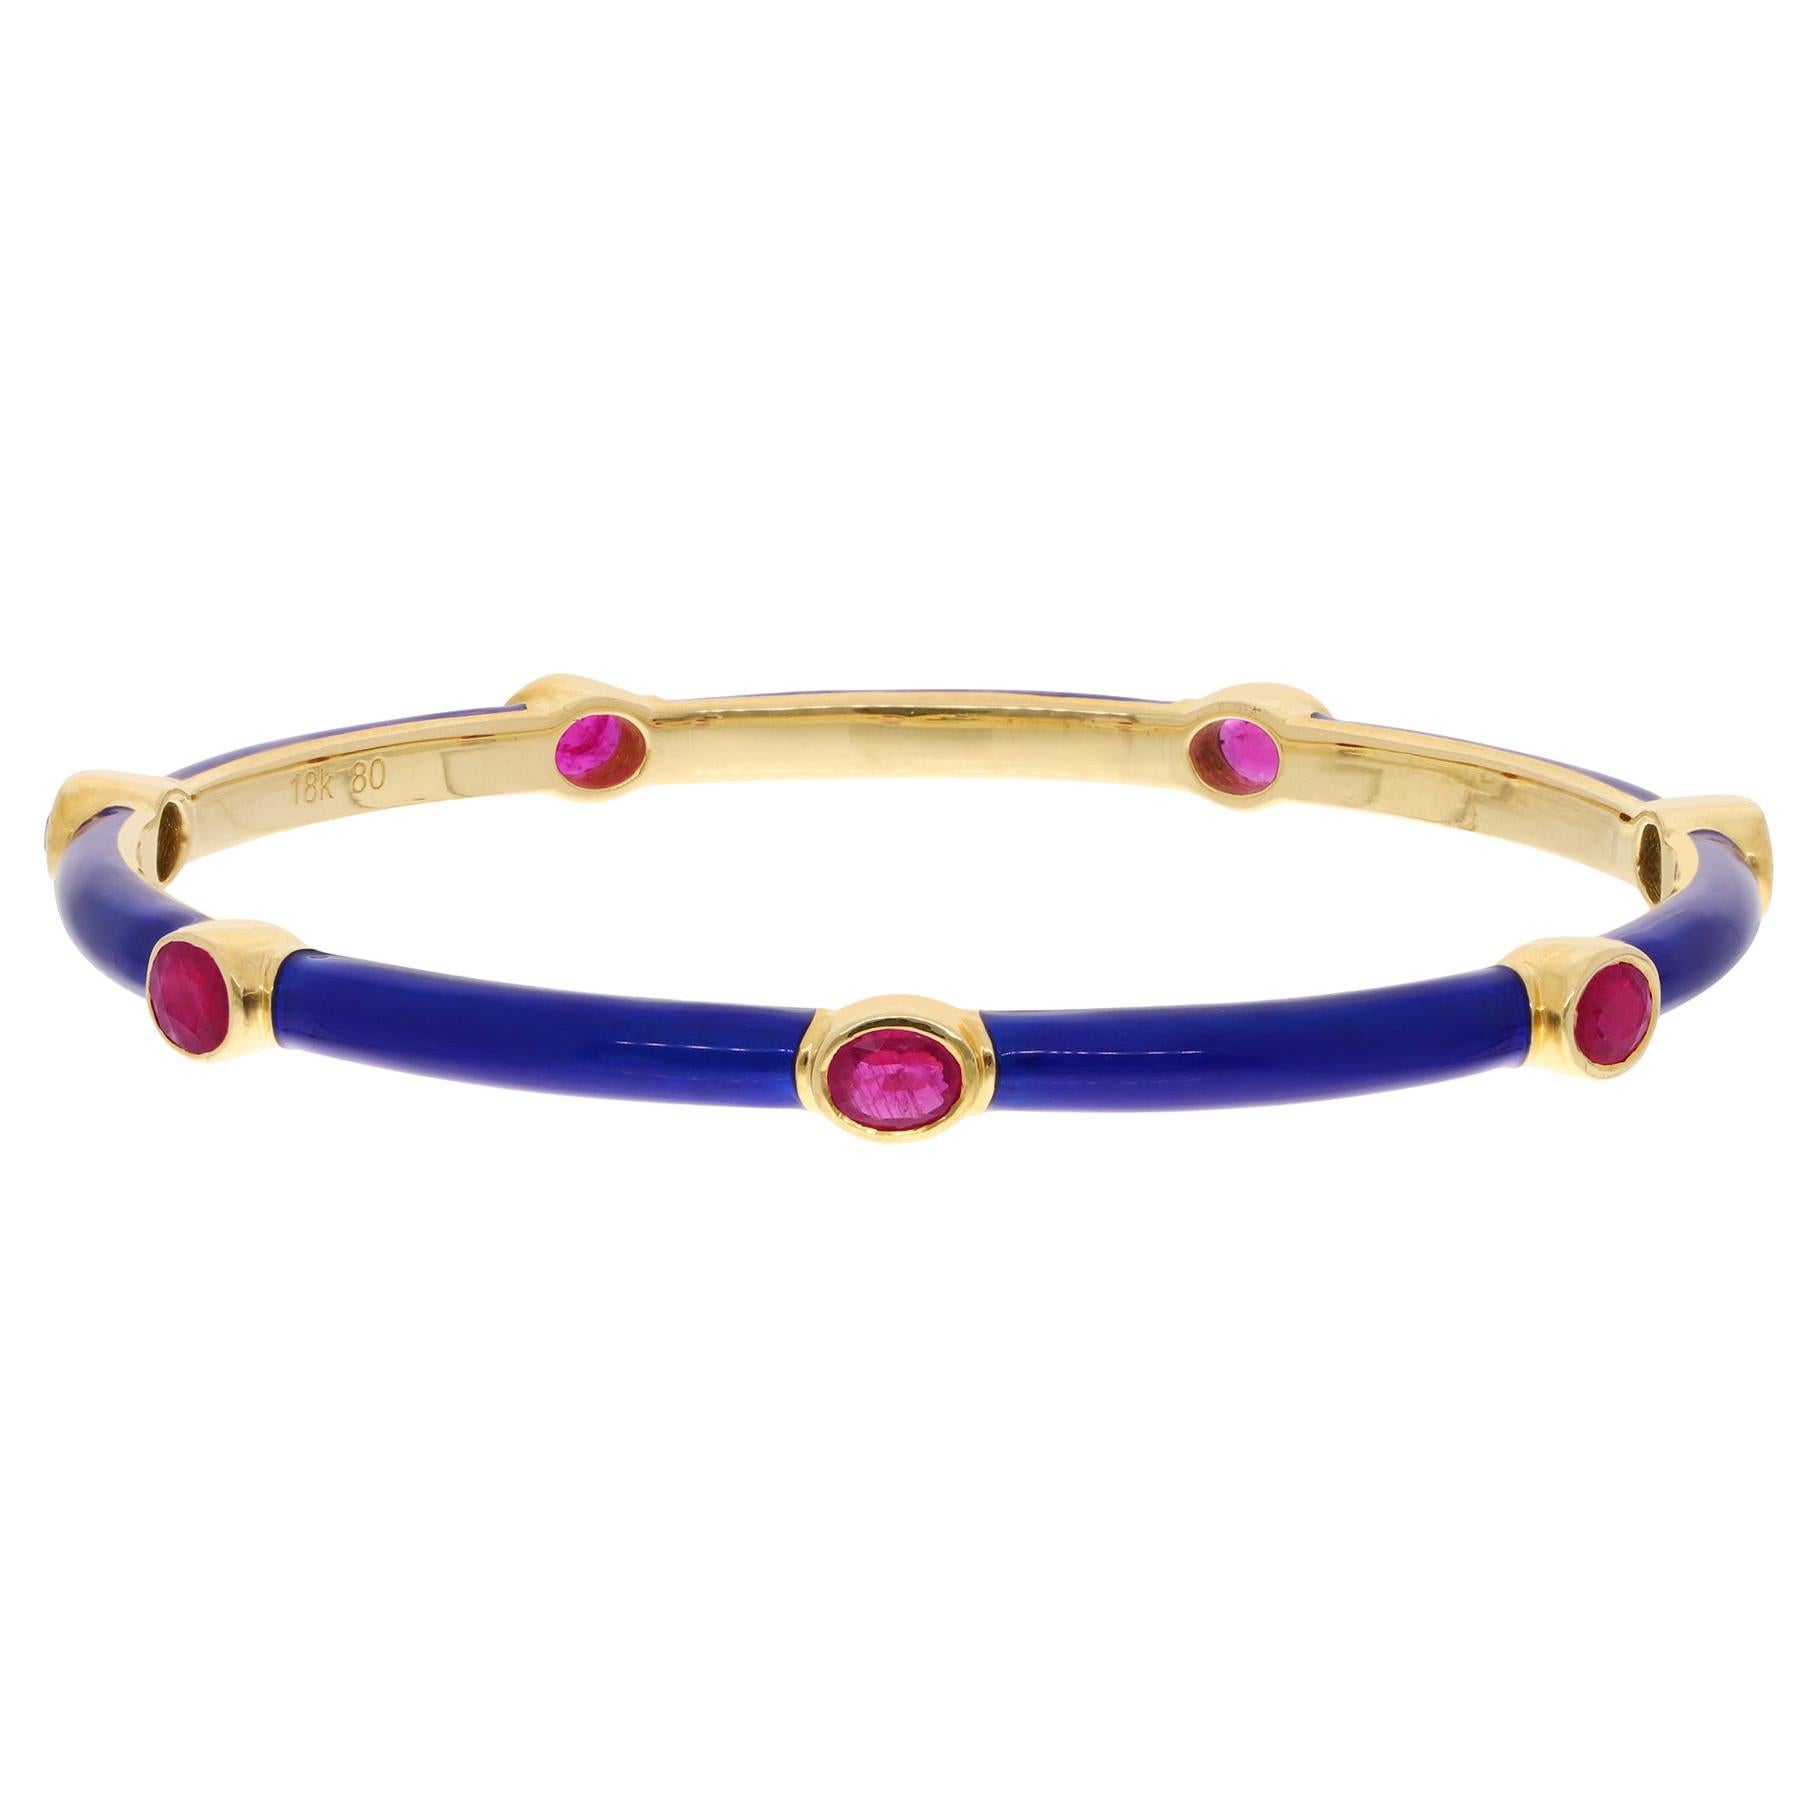 2.3 Carat Oval Ruby Gemstone Enamel Bangle Bracelet 18 Karat Yellow Gold Jewelry